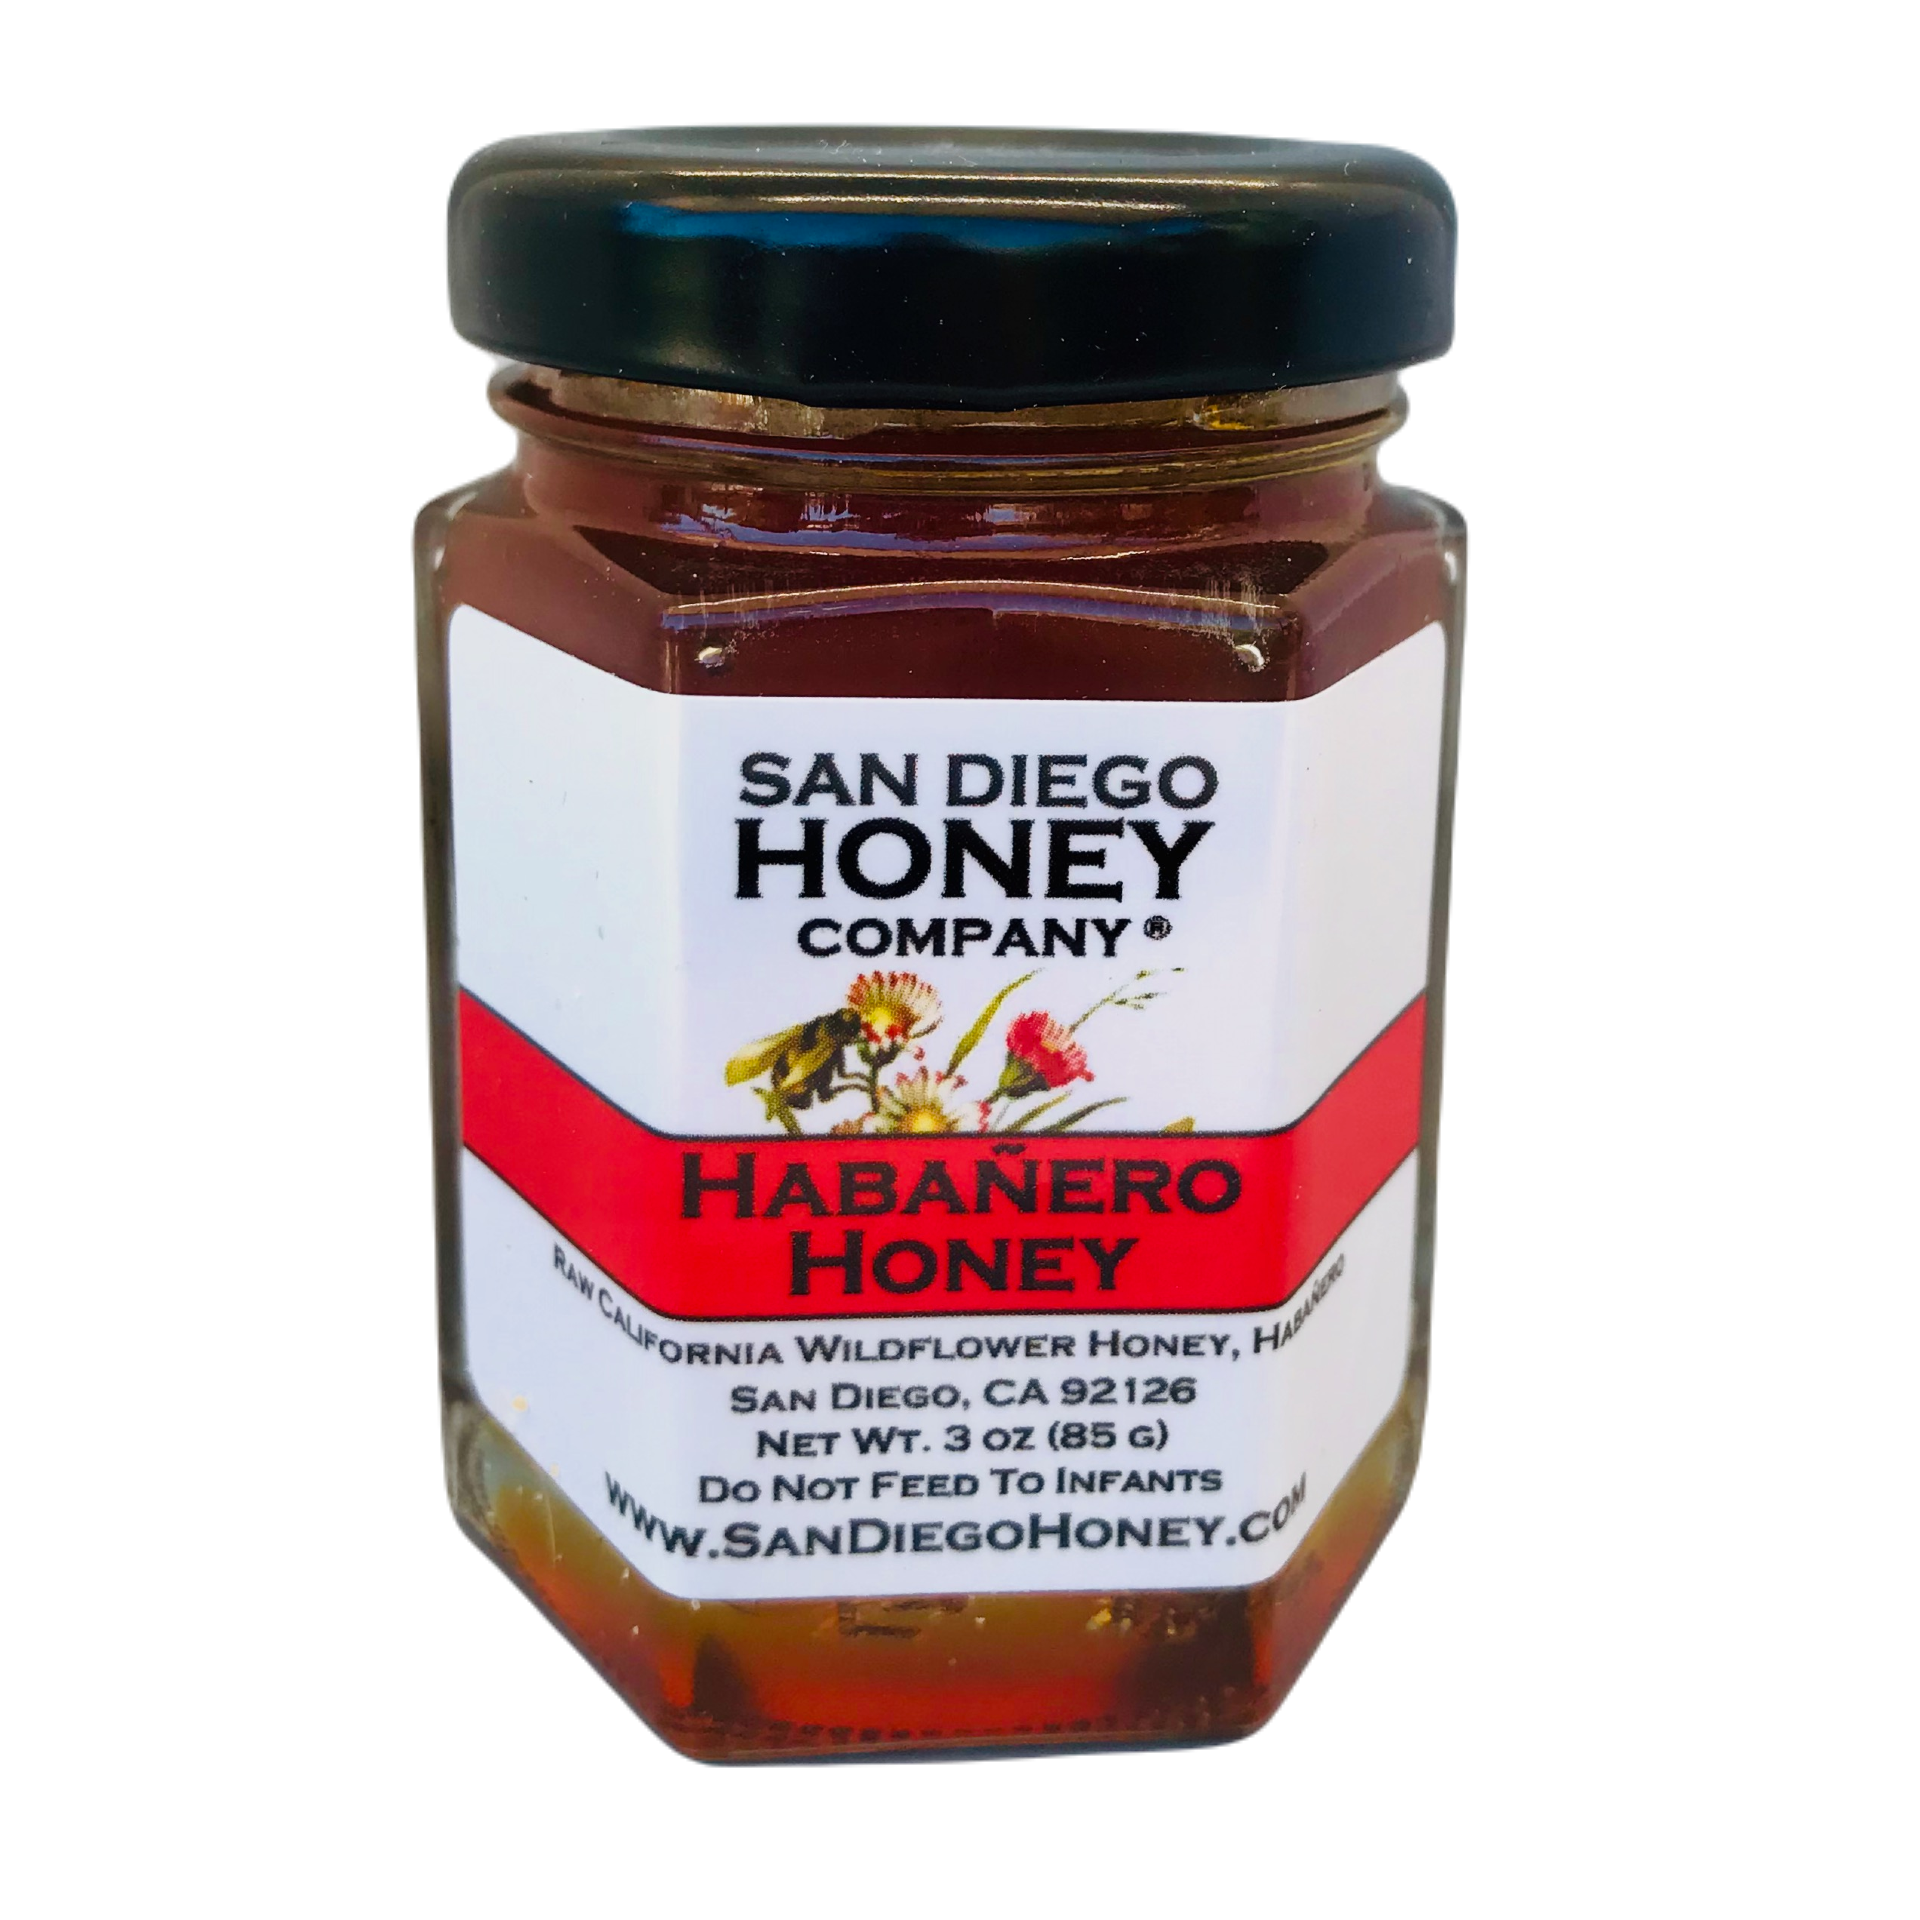 Habanero Infused Raw San Diego Honey